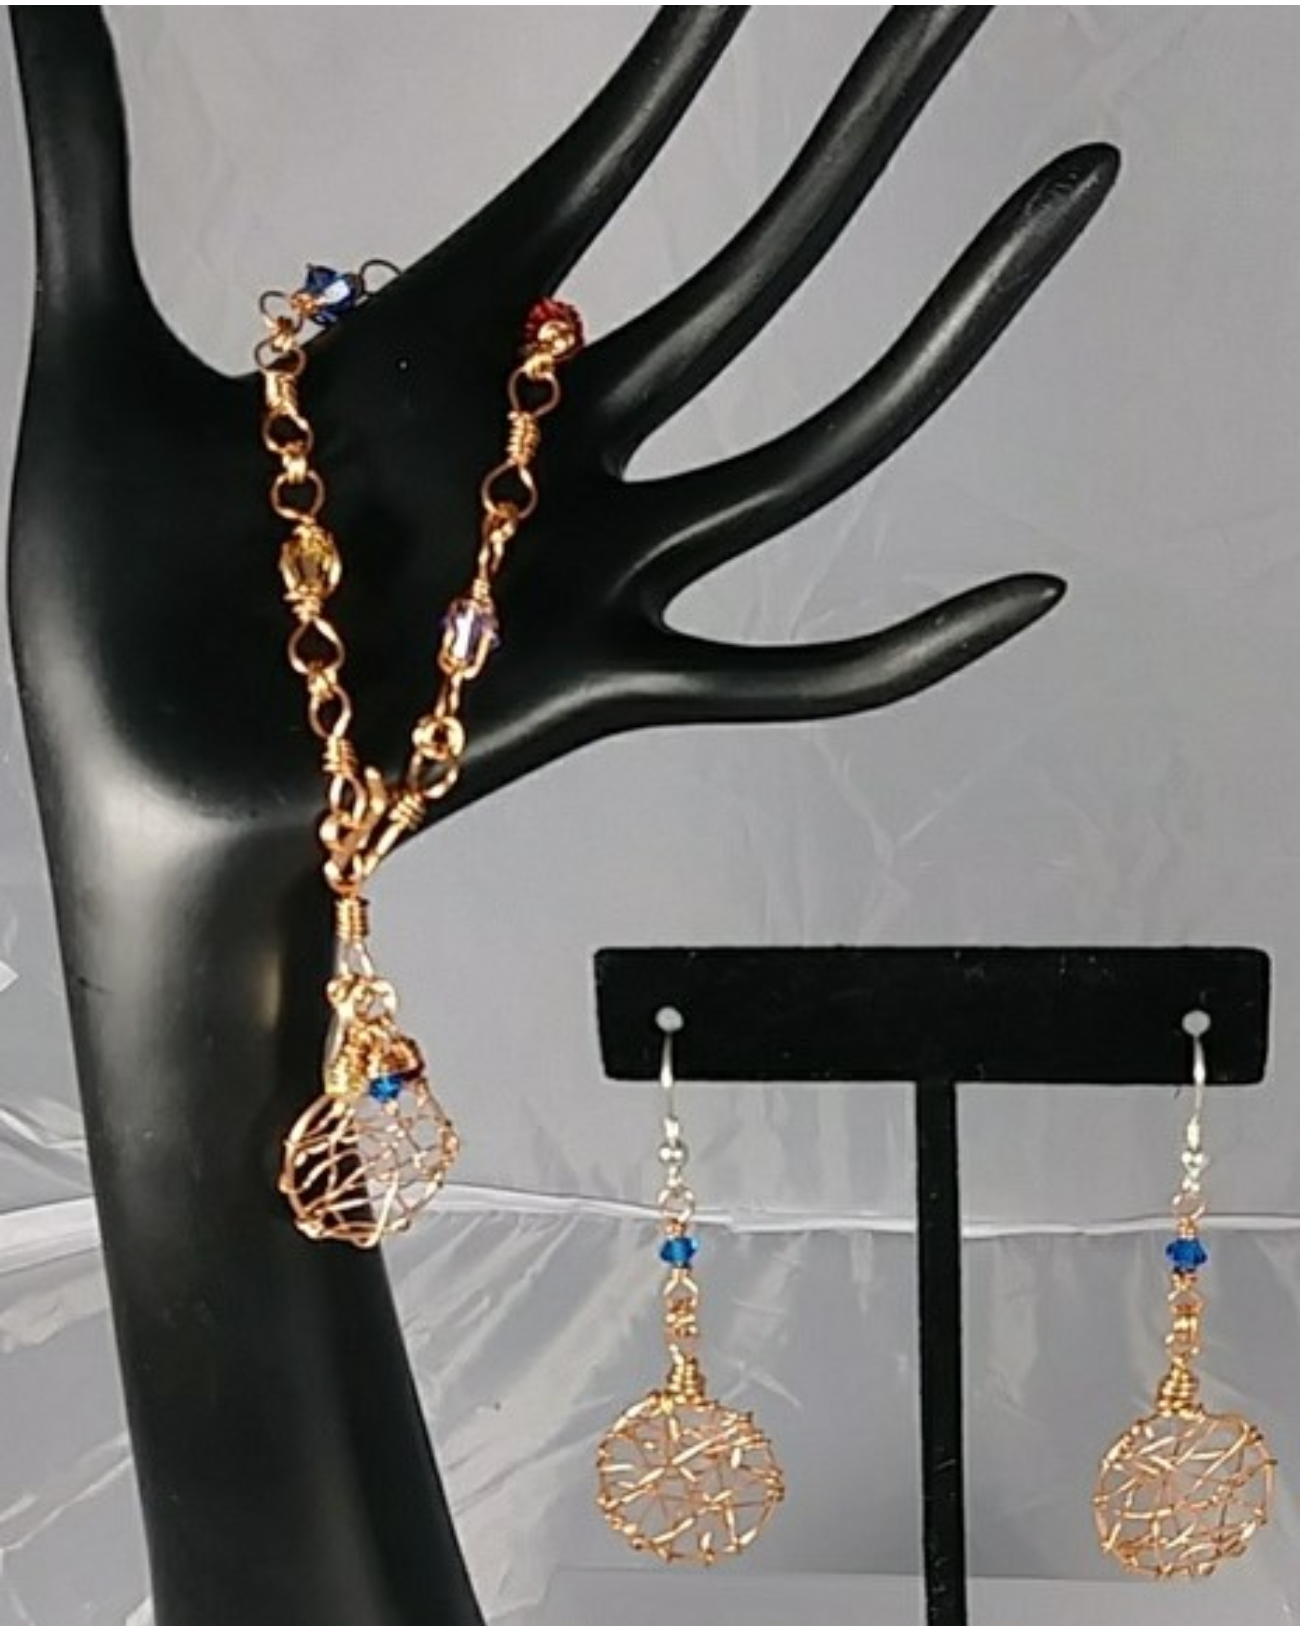 (221  - BCT) - Description: Handcrafted Bracelet/Earrings, Copper Wire, Swarovski Crystals, Sterling Silver Earwire Hook Closure - Dimension: Bracelet 8' L (Inches)